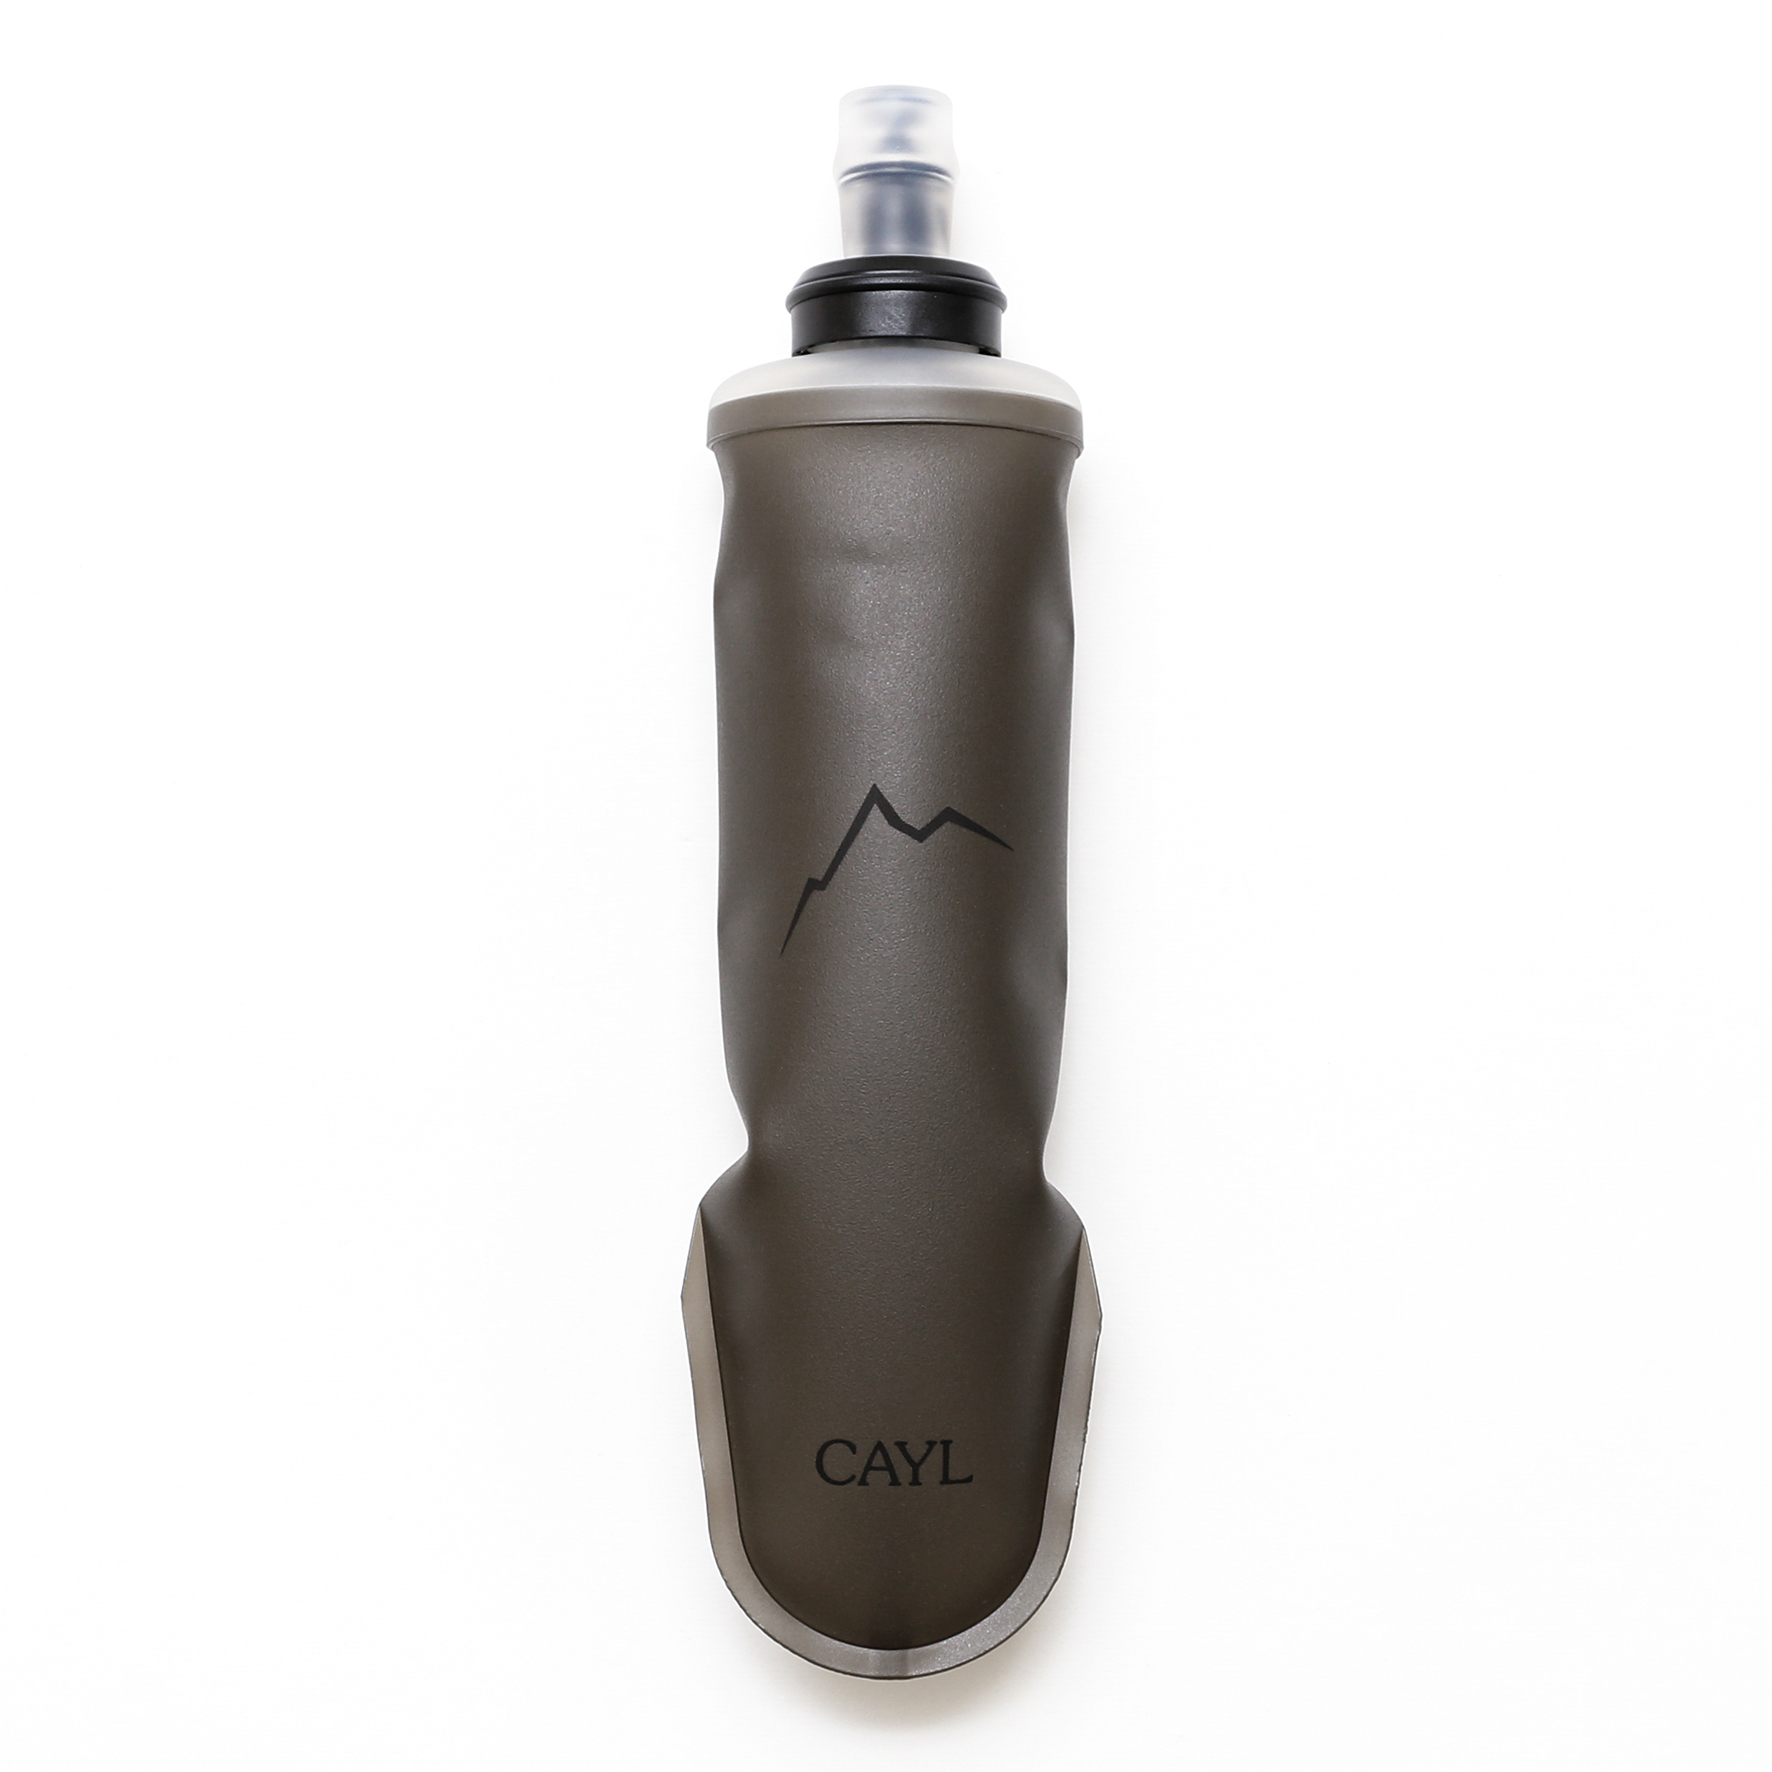 CAYL 소프트플라스크 Soft Flask 250ml / Mommoth